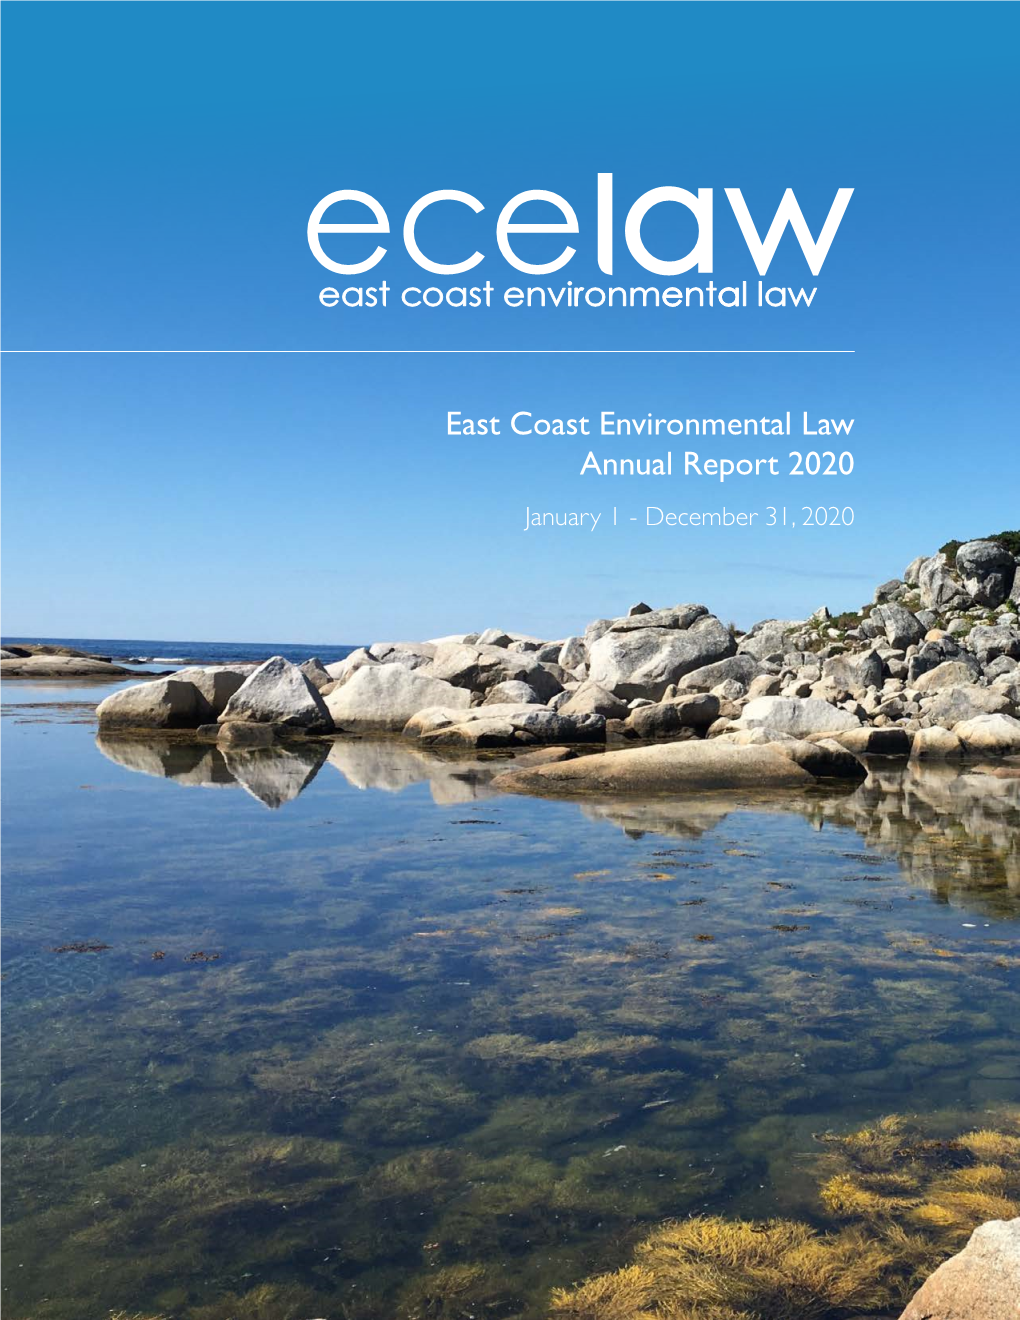 East Coast Environmental Law Annual Report 2020 January 1 - December 31, 2020